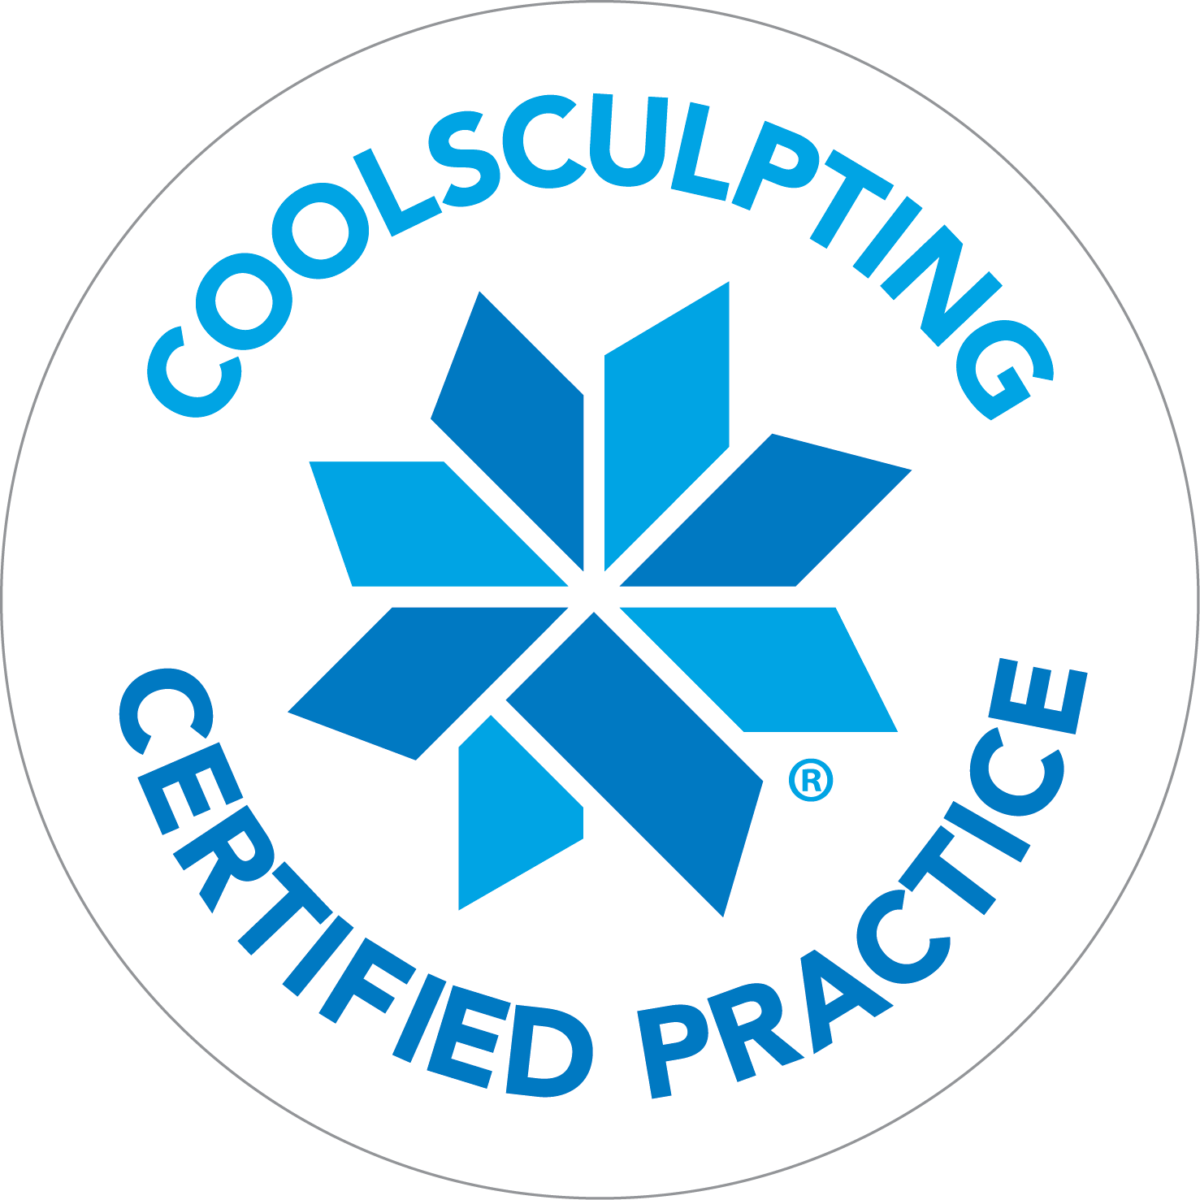 CoolSculpting Certified Practice in Atlanta